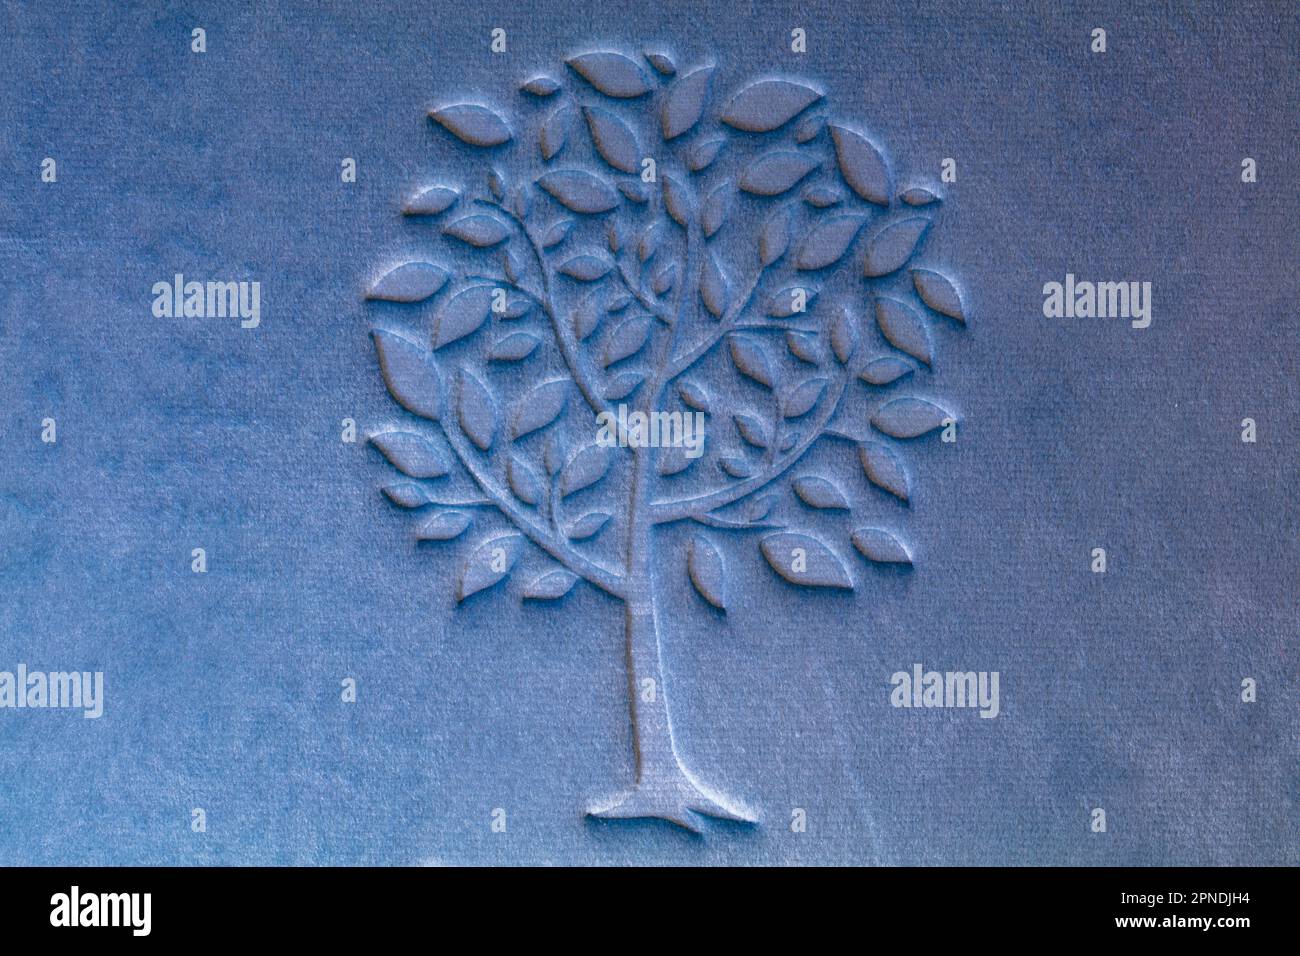 https://c8.alamy.com/comp/2PNDJH4/tree-imprint-on-blue-velour-textured-fabrick-for-design-purpose-2PNDJH4.jpg